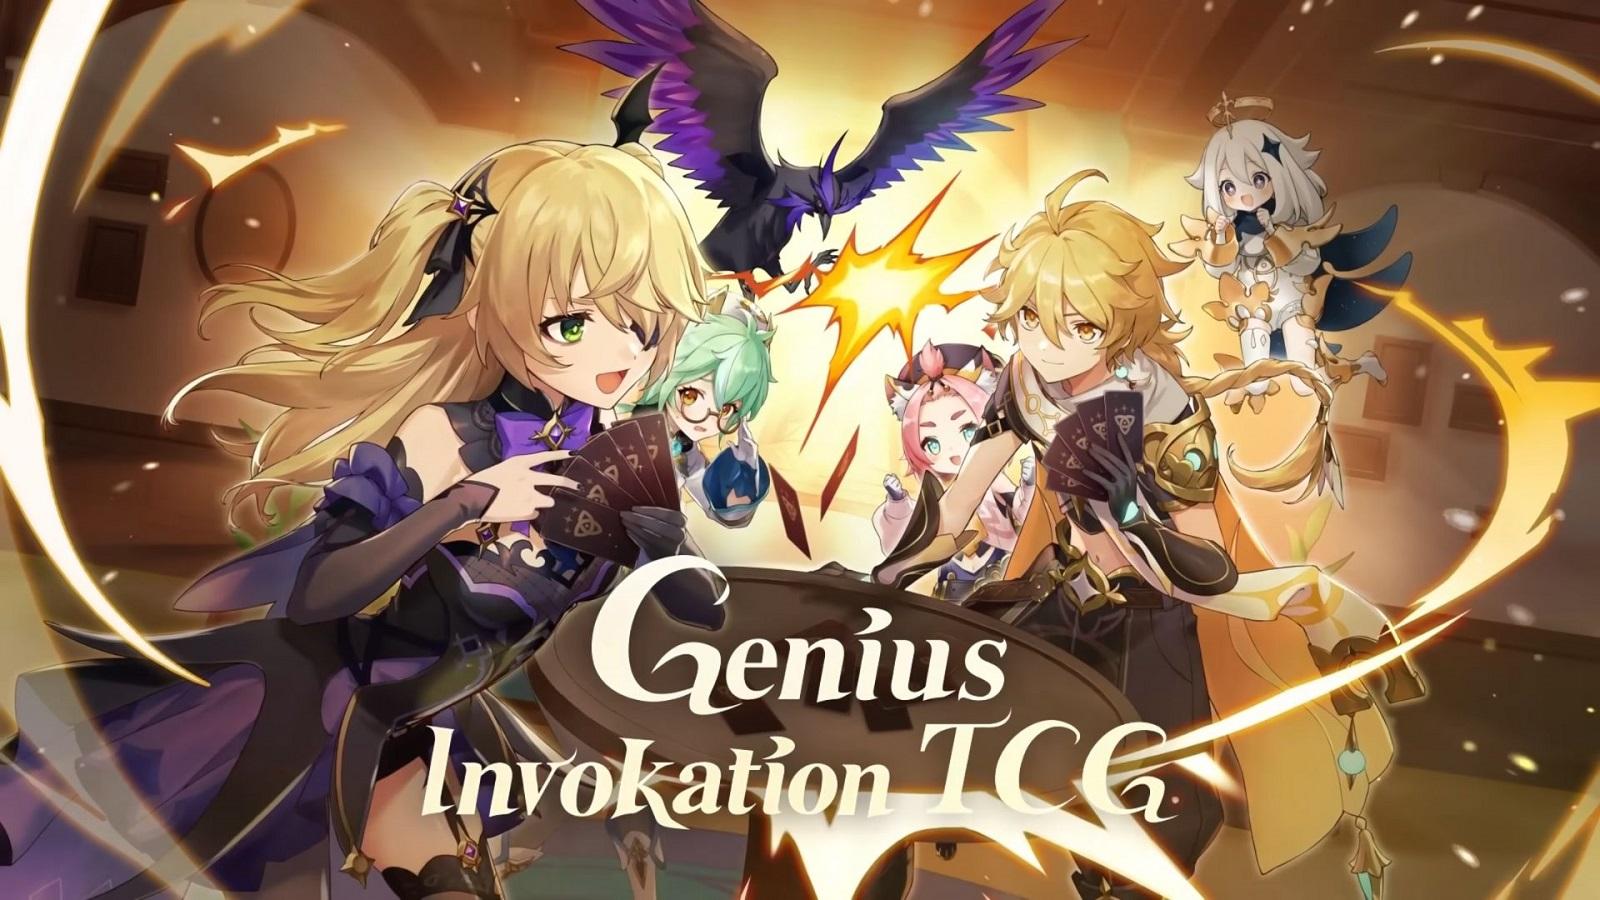 Genius Invokation TCG official artwork